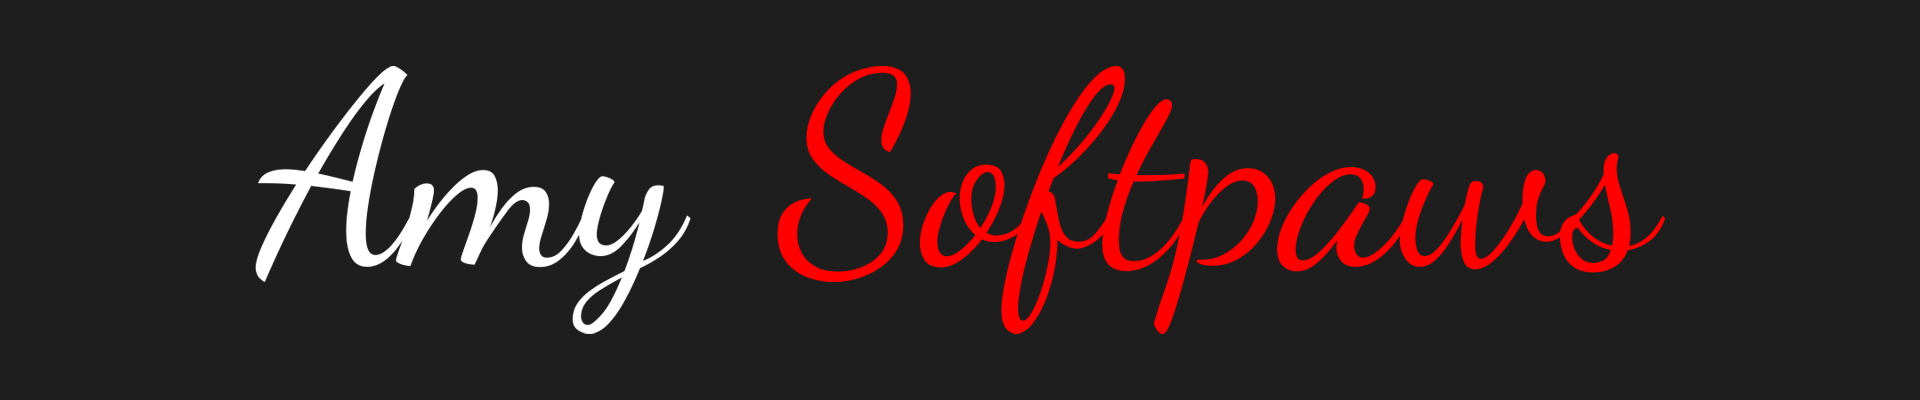 Amy Softpaws Logo